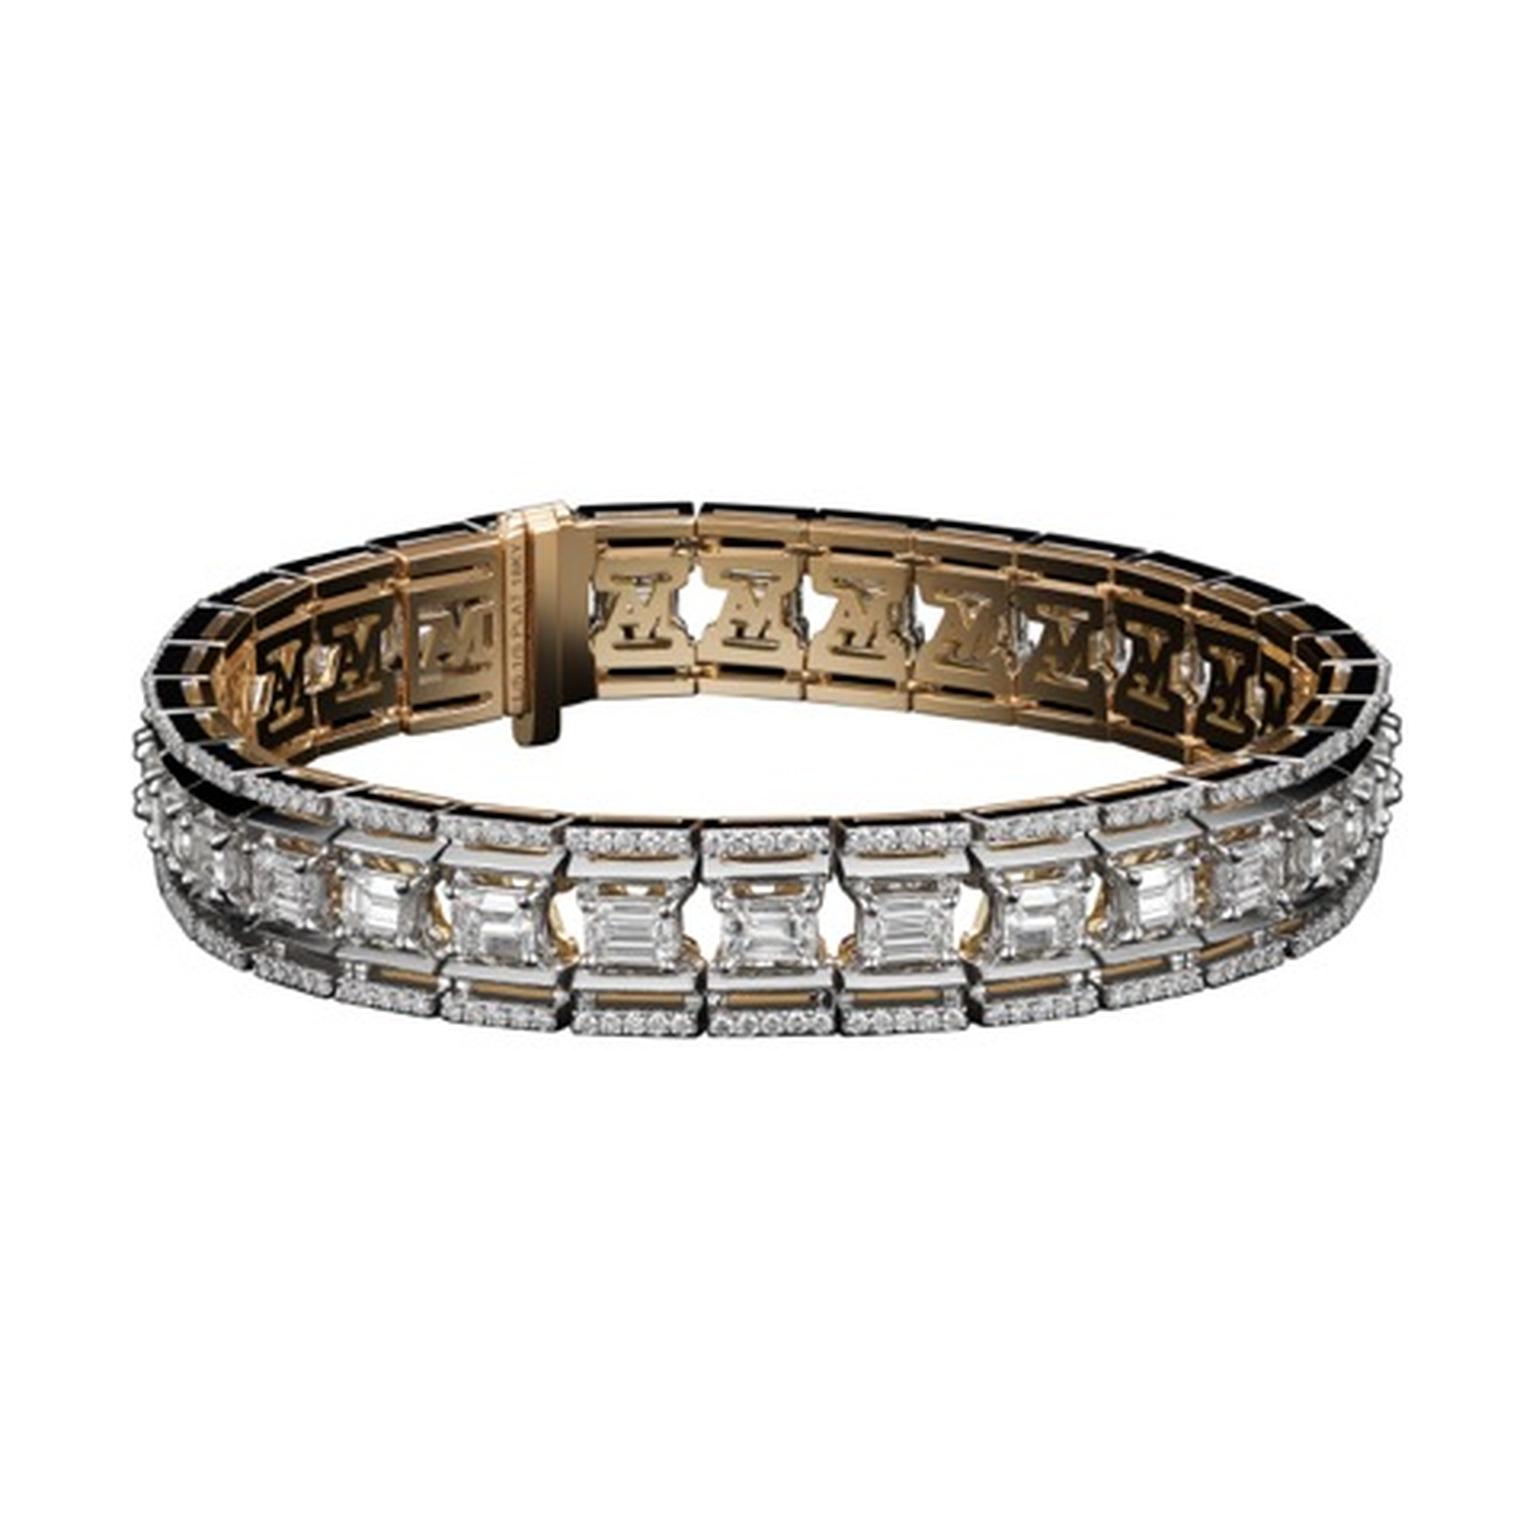 Alexandra Mor_Emerald Cut Platform Diamond Bracelet HighRez White BG Full view (AMBRC6005-01_E).jpg